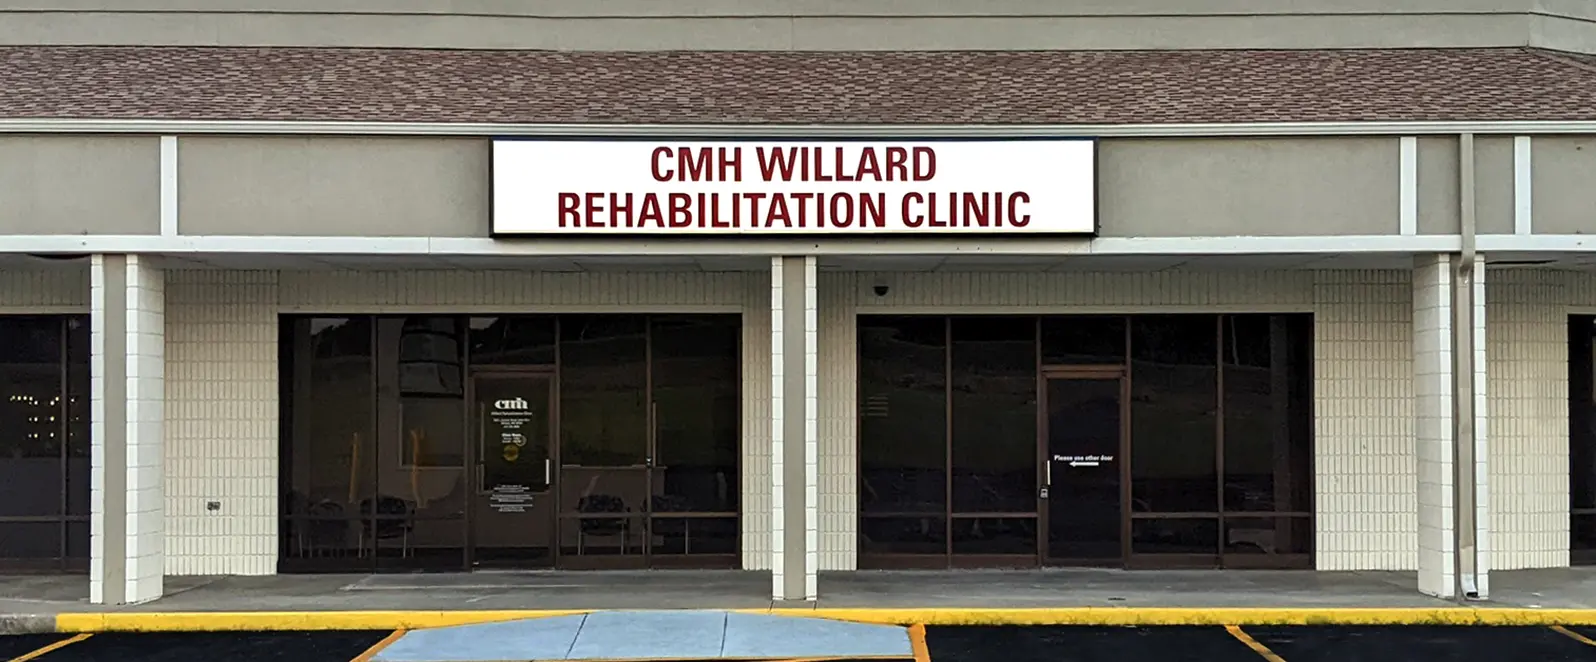 Willard Rehabilitation Clinic building exterior